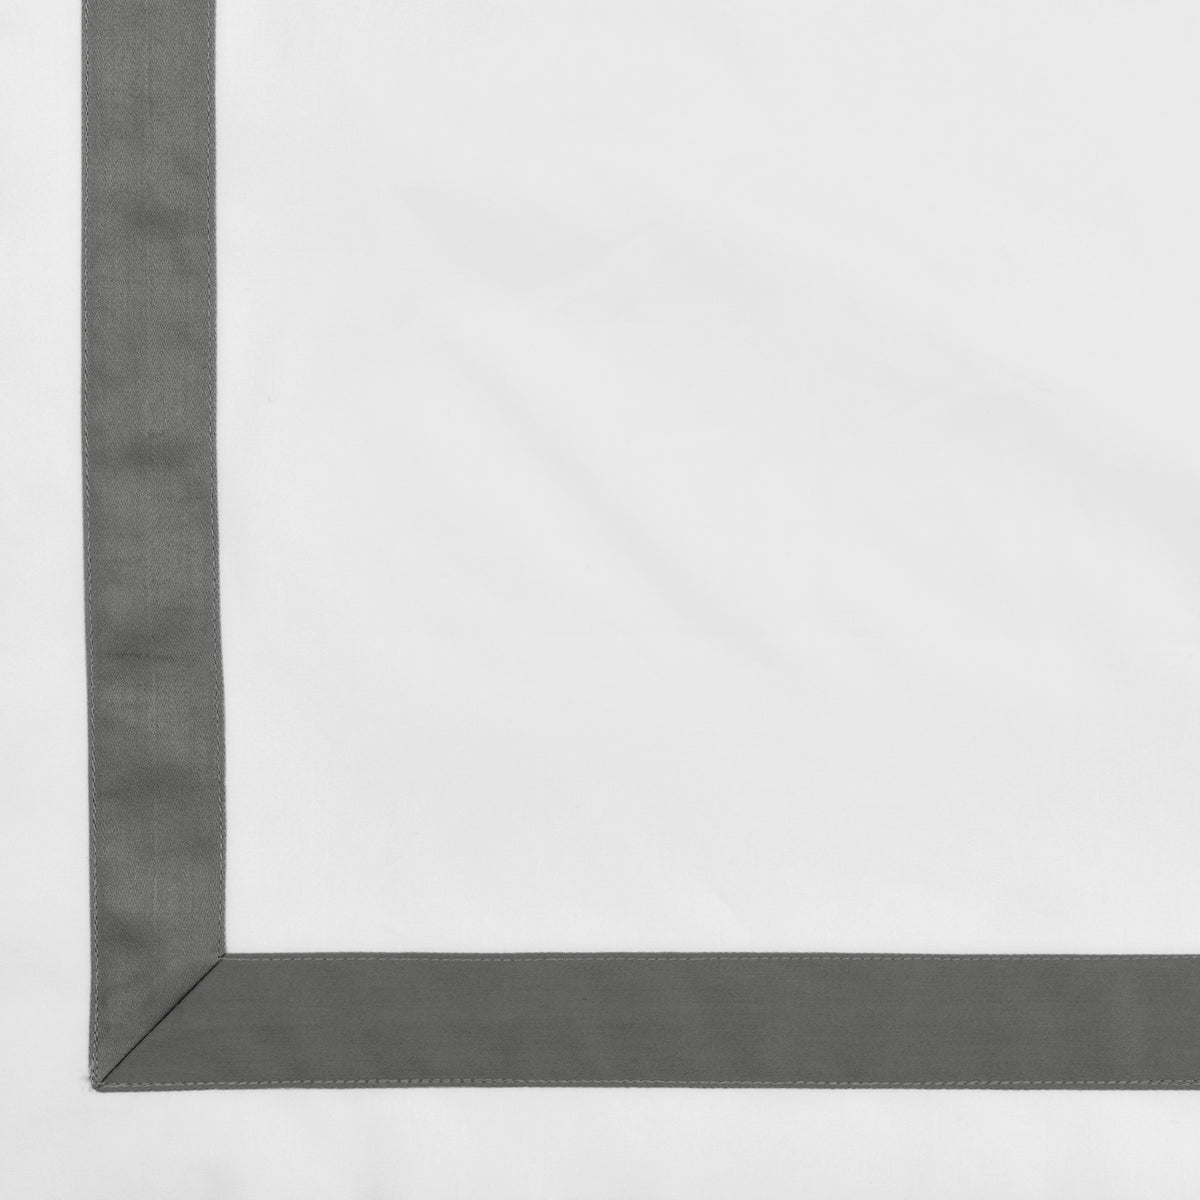 Swatch Sample of Signoria Pegaso Bedding in White/Lead Grey Color